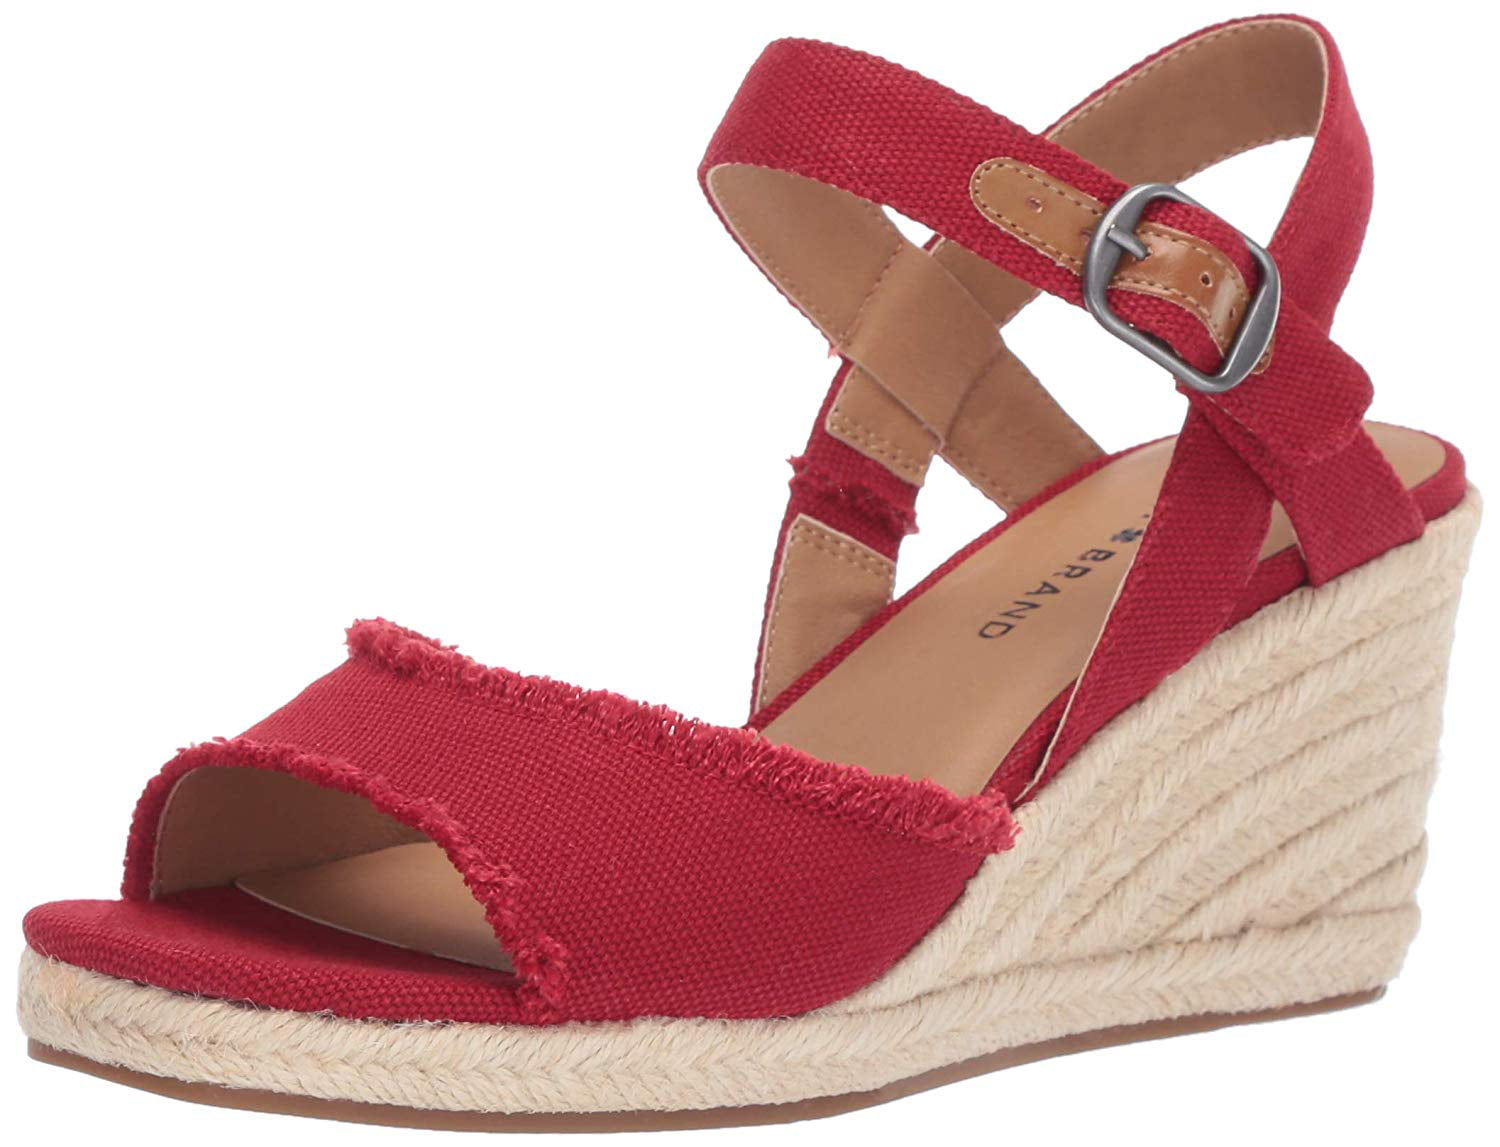 Lucky Brand Women's Mindra Red Open Toe Platform Summer Wedge Sandal (12 M US, Red) - Walmart.com